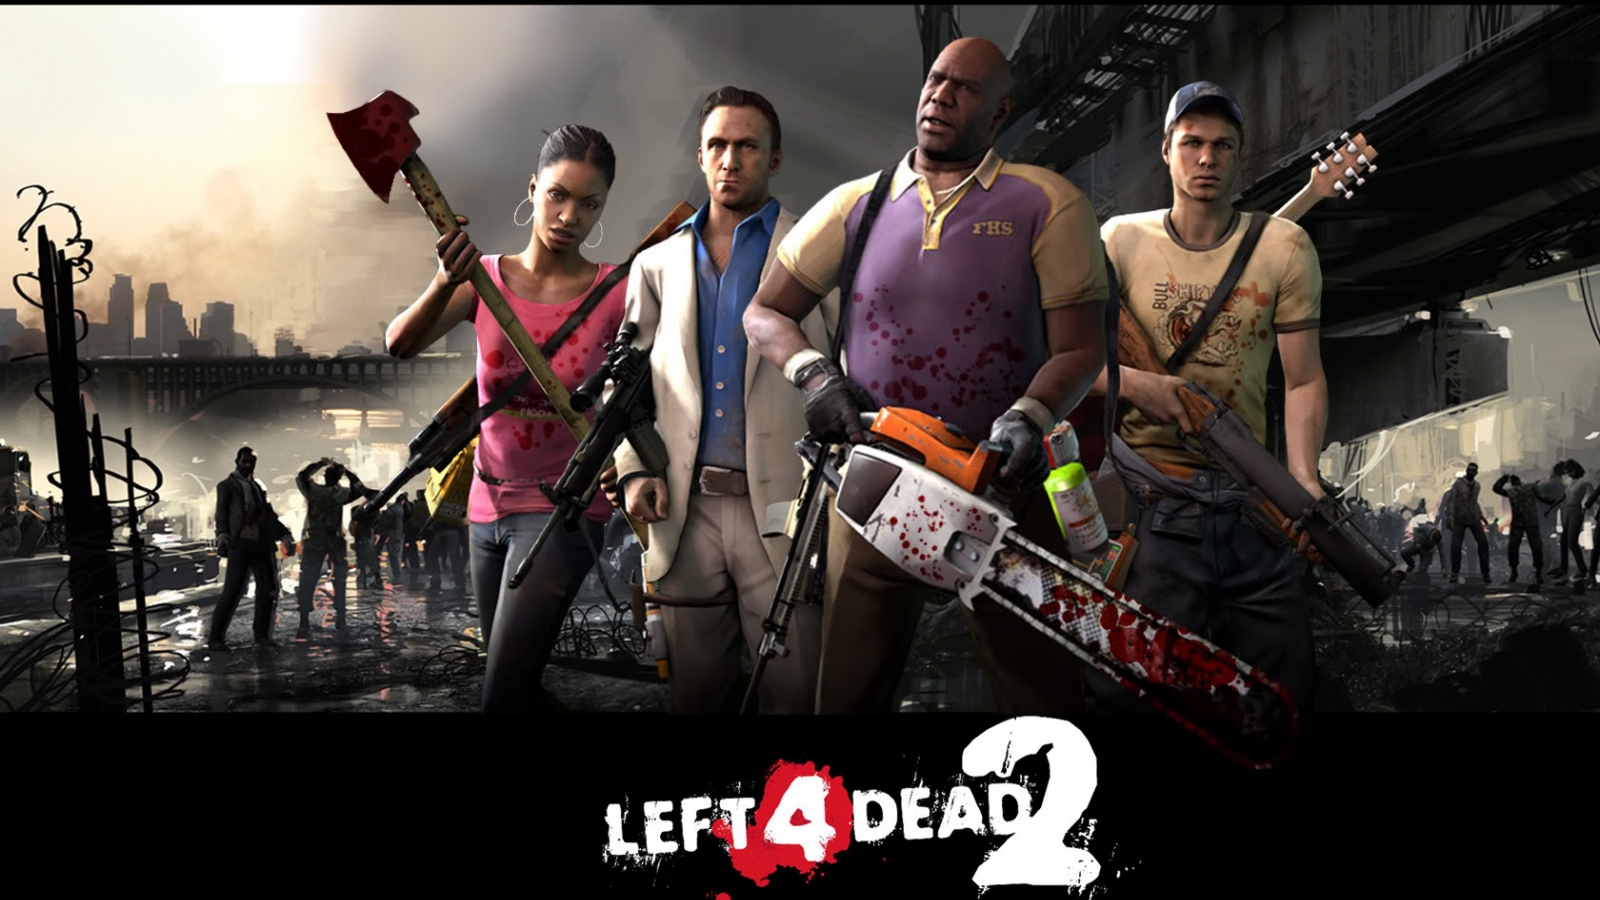 General 1600x900 Left 4 Dead Left 4 Dead 2 chainsaws axes guitar gun zombies bridge cityscape video games video game characters